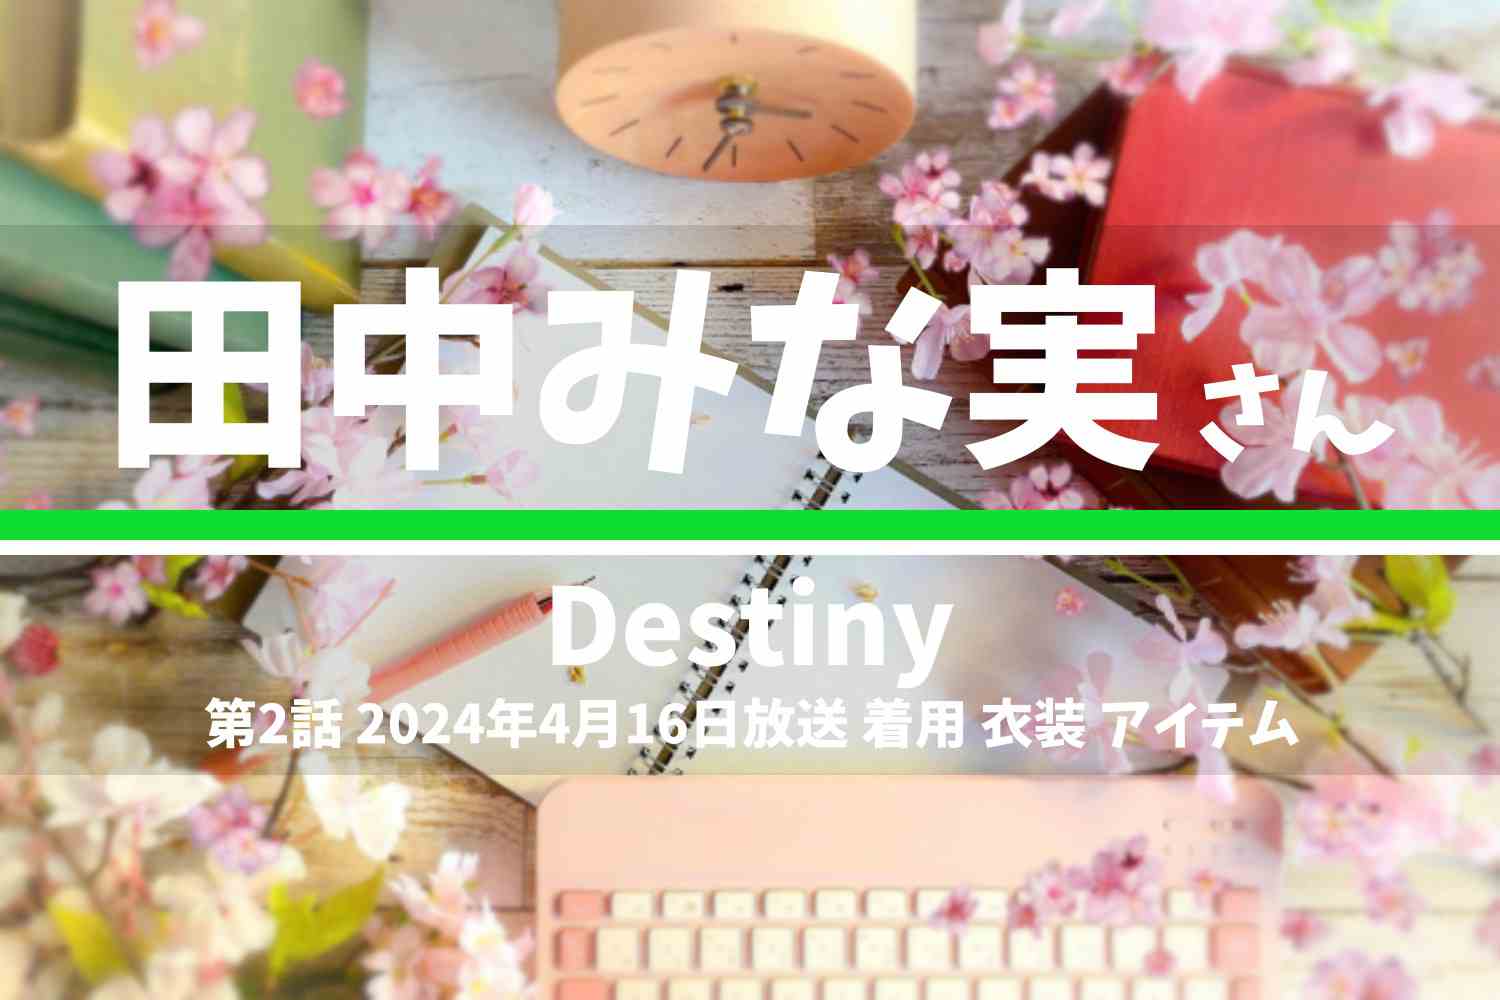 Destiny 田中みな実さん テレビドラマ 衣装 2024年4月16日放送